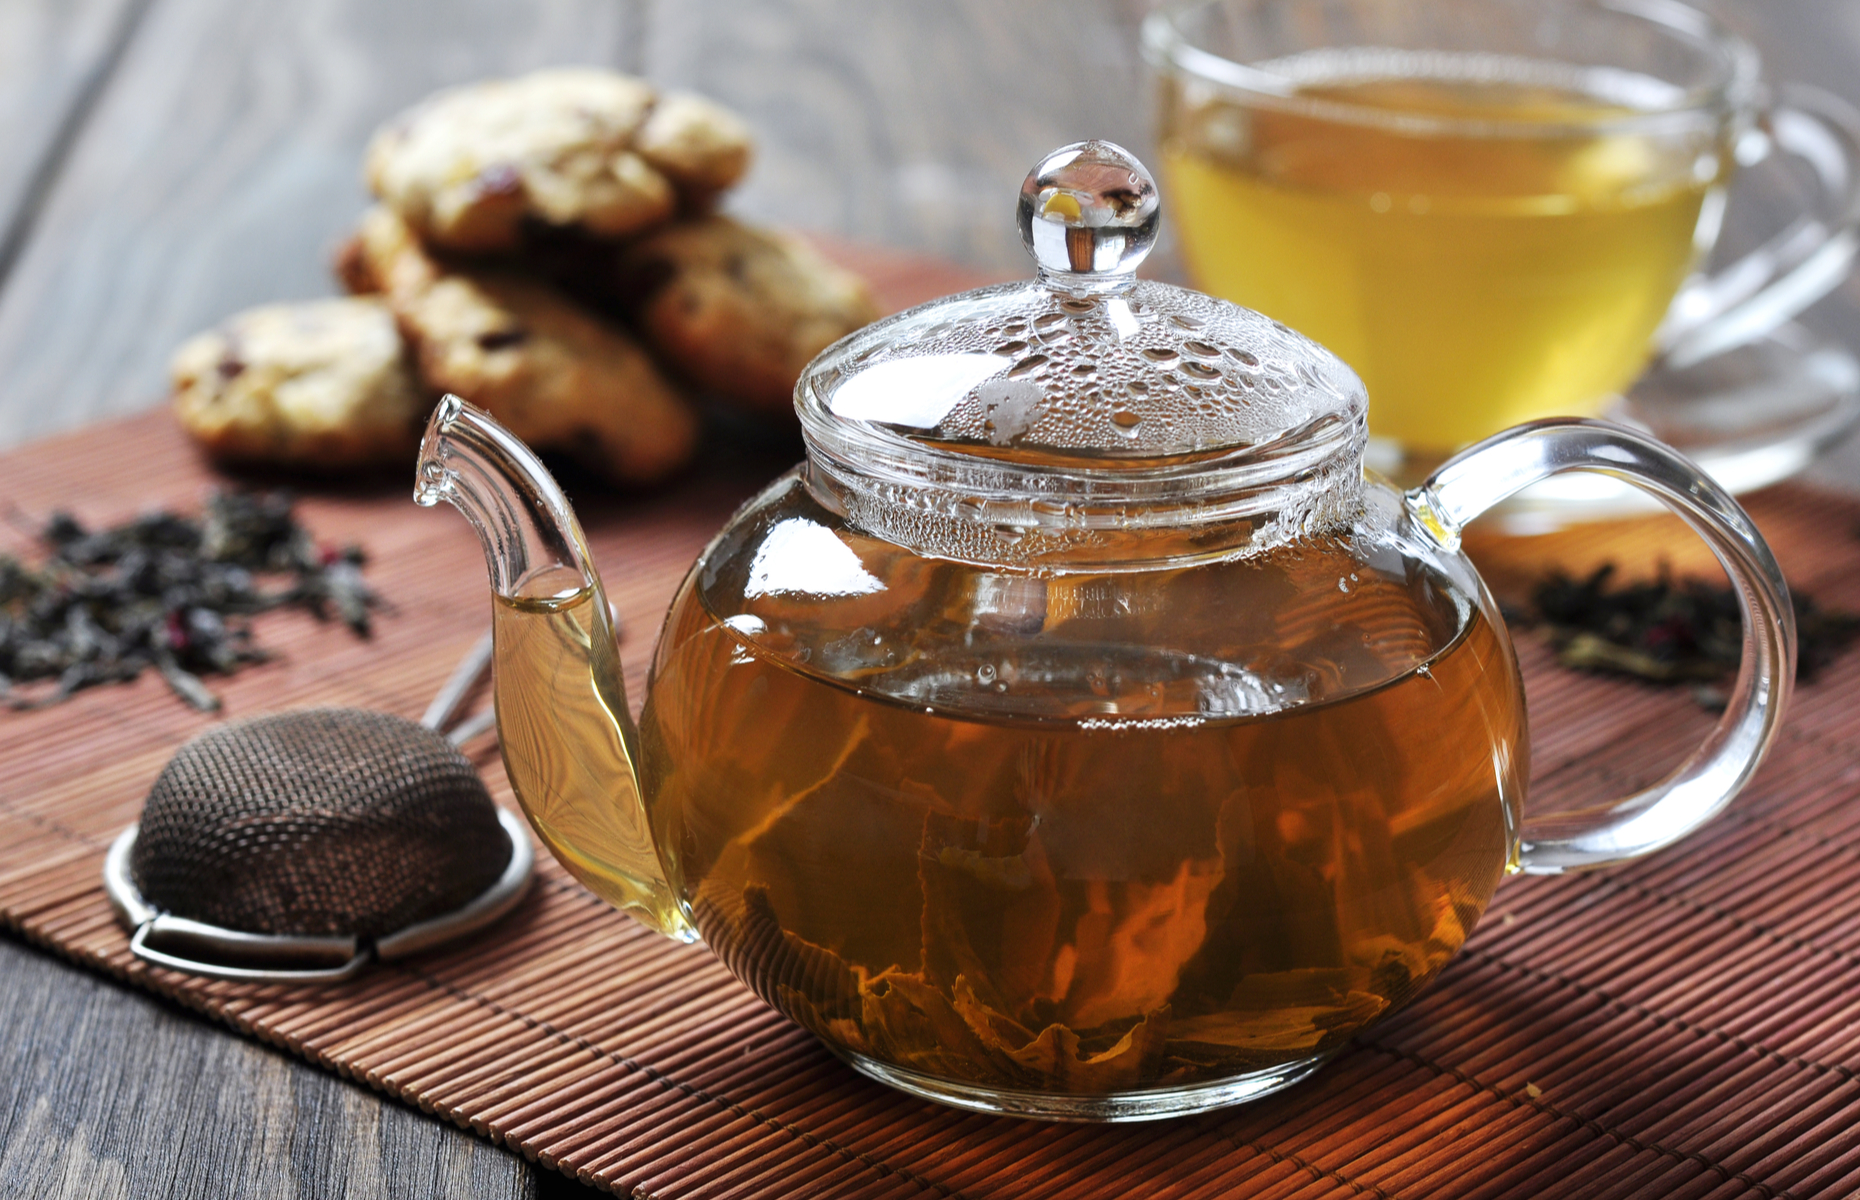 Teapot with tea leaves (Image: mama_mia/Shutterstock)